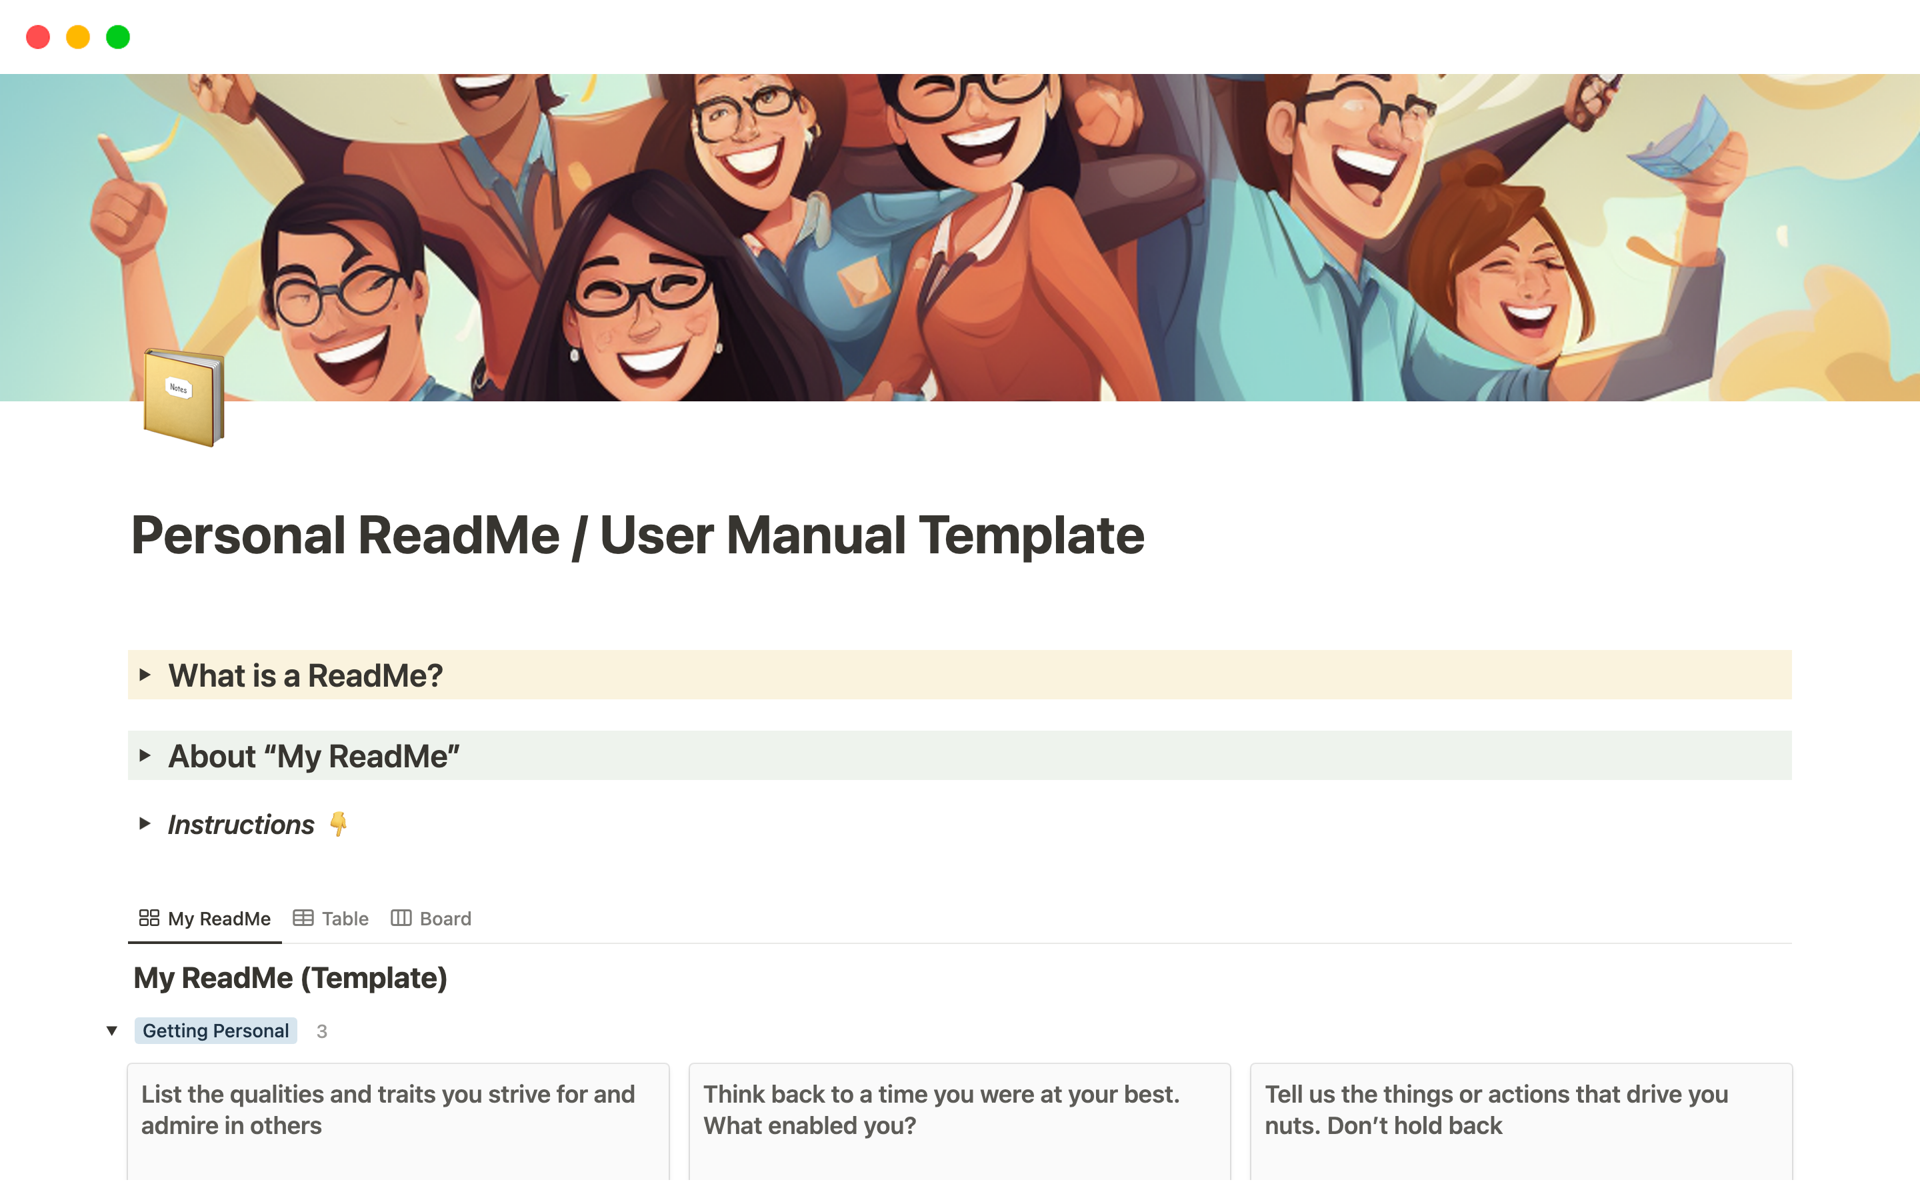 Vista previa de una plantilla para Personal ReadMe / User Manual